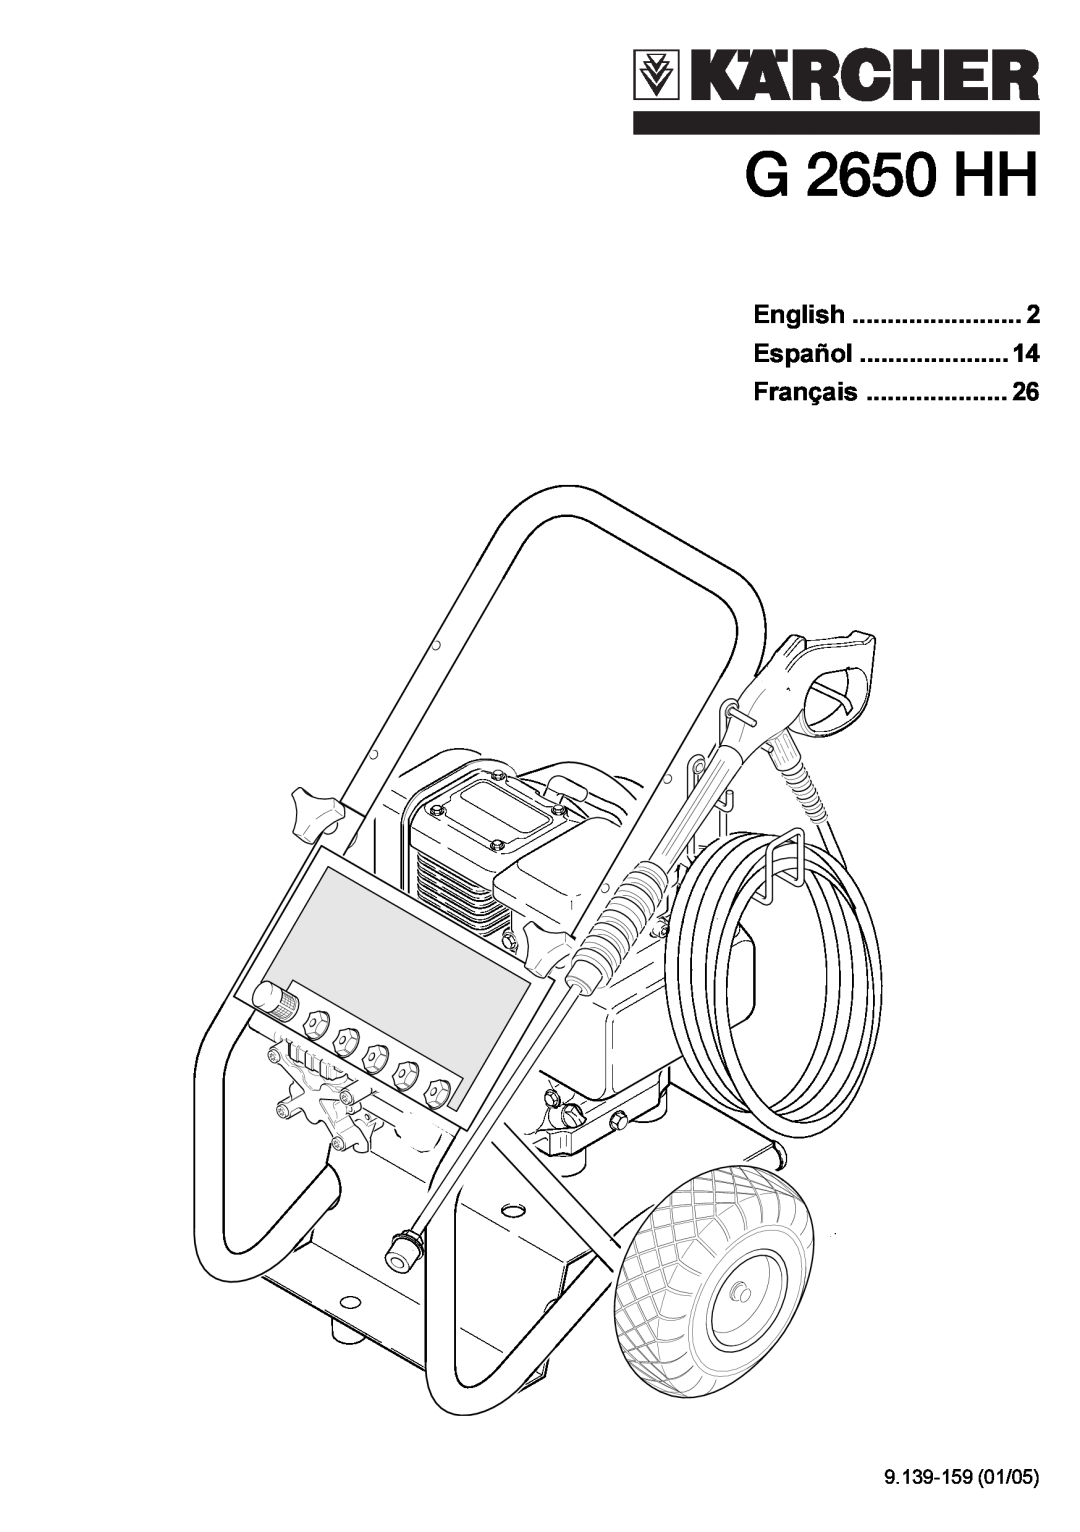 Karcher G 2650 HH manual 